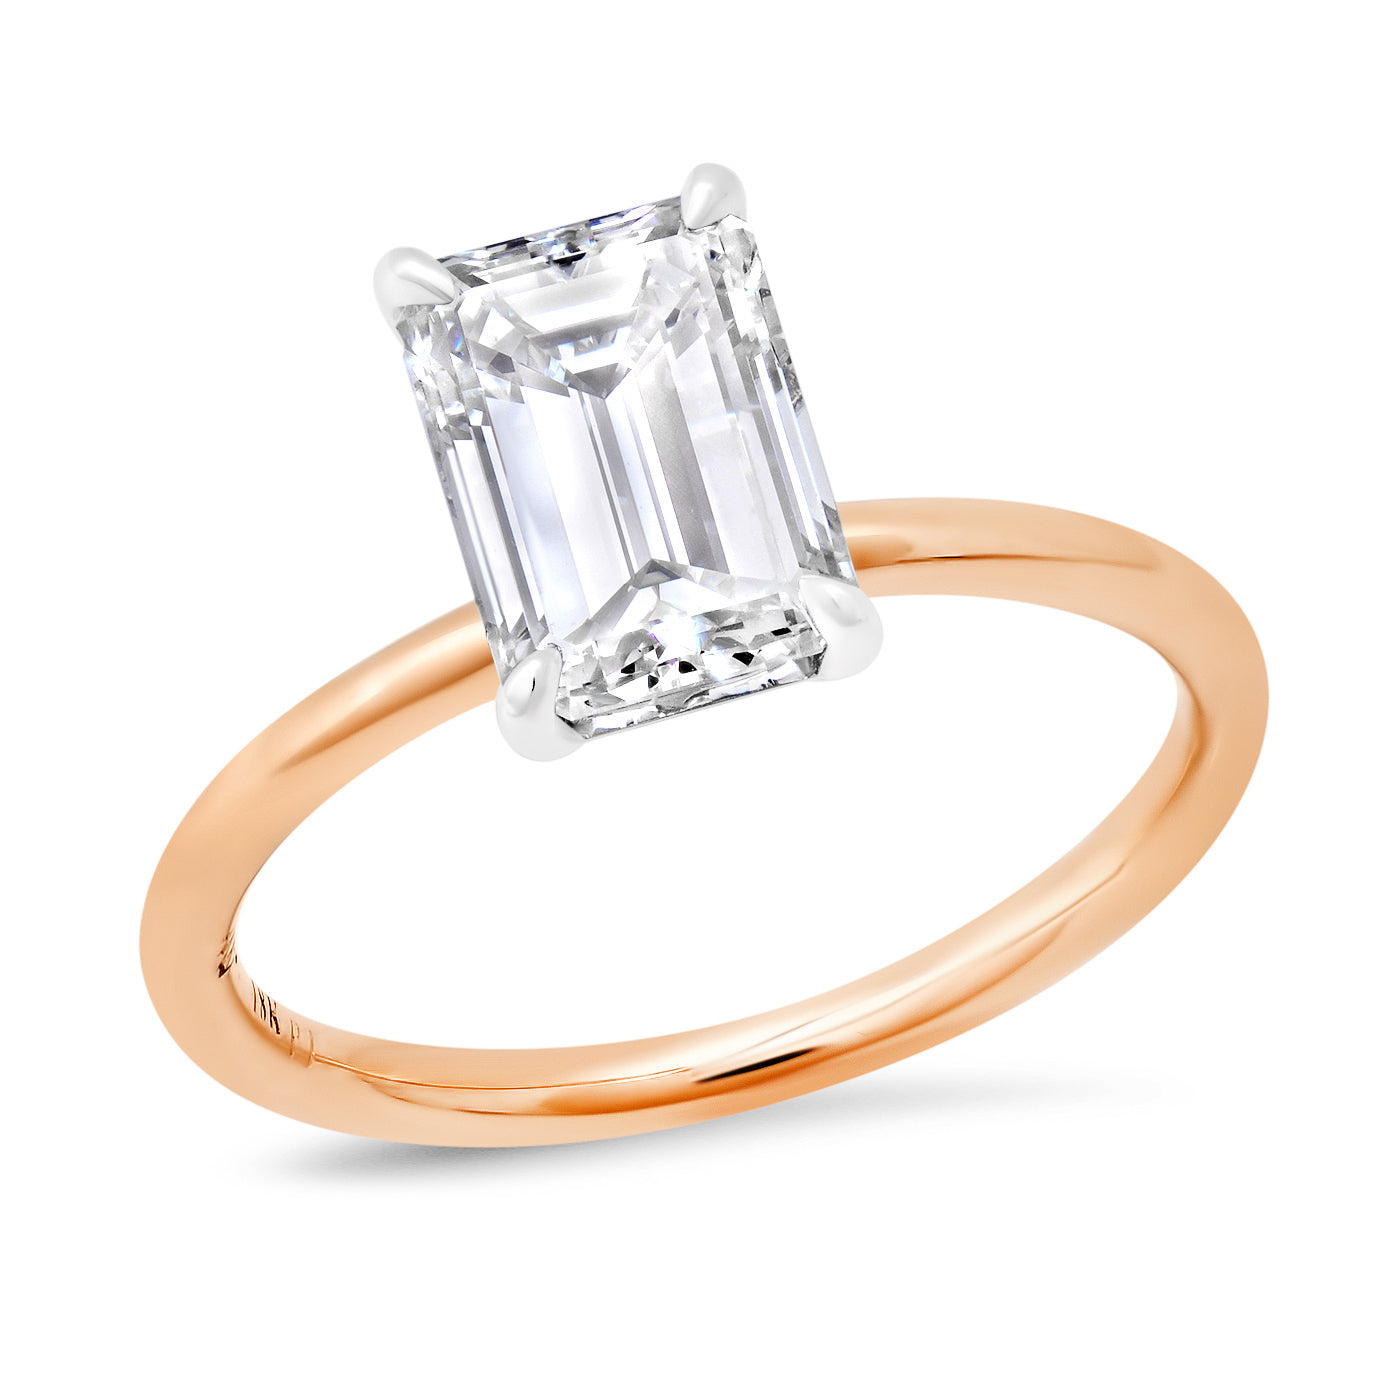 Sold - 2.02 Carat Emerald Cut Engagement Ring